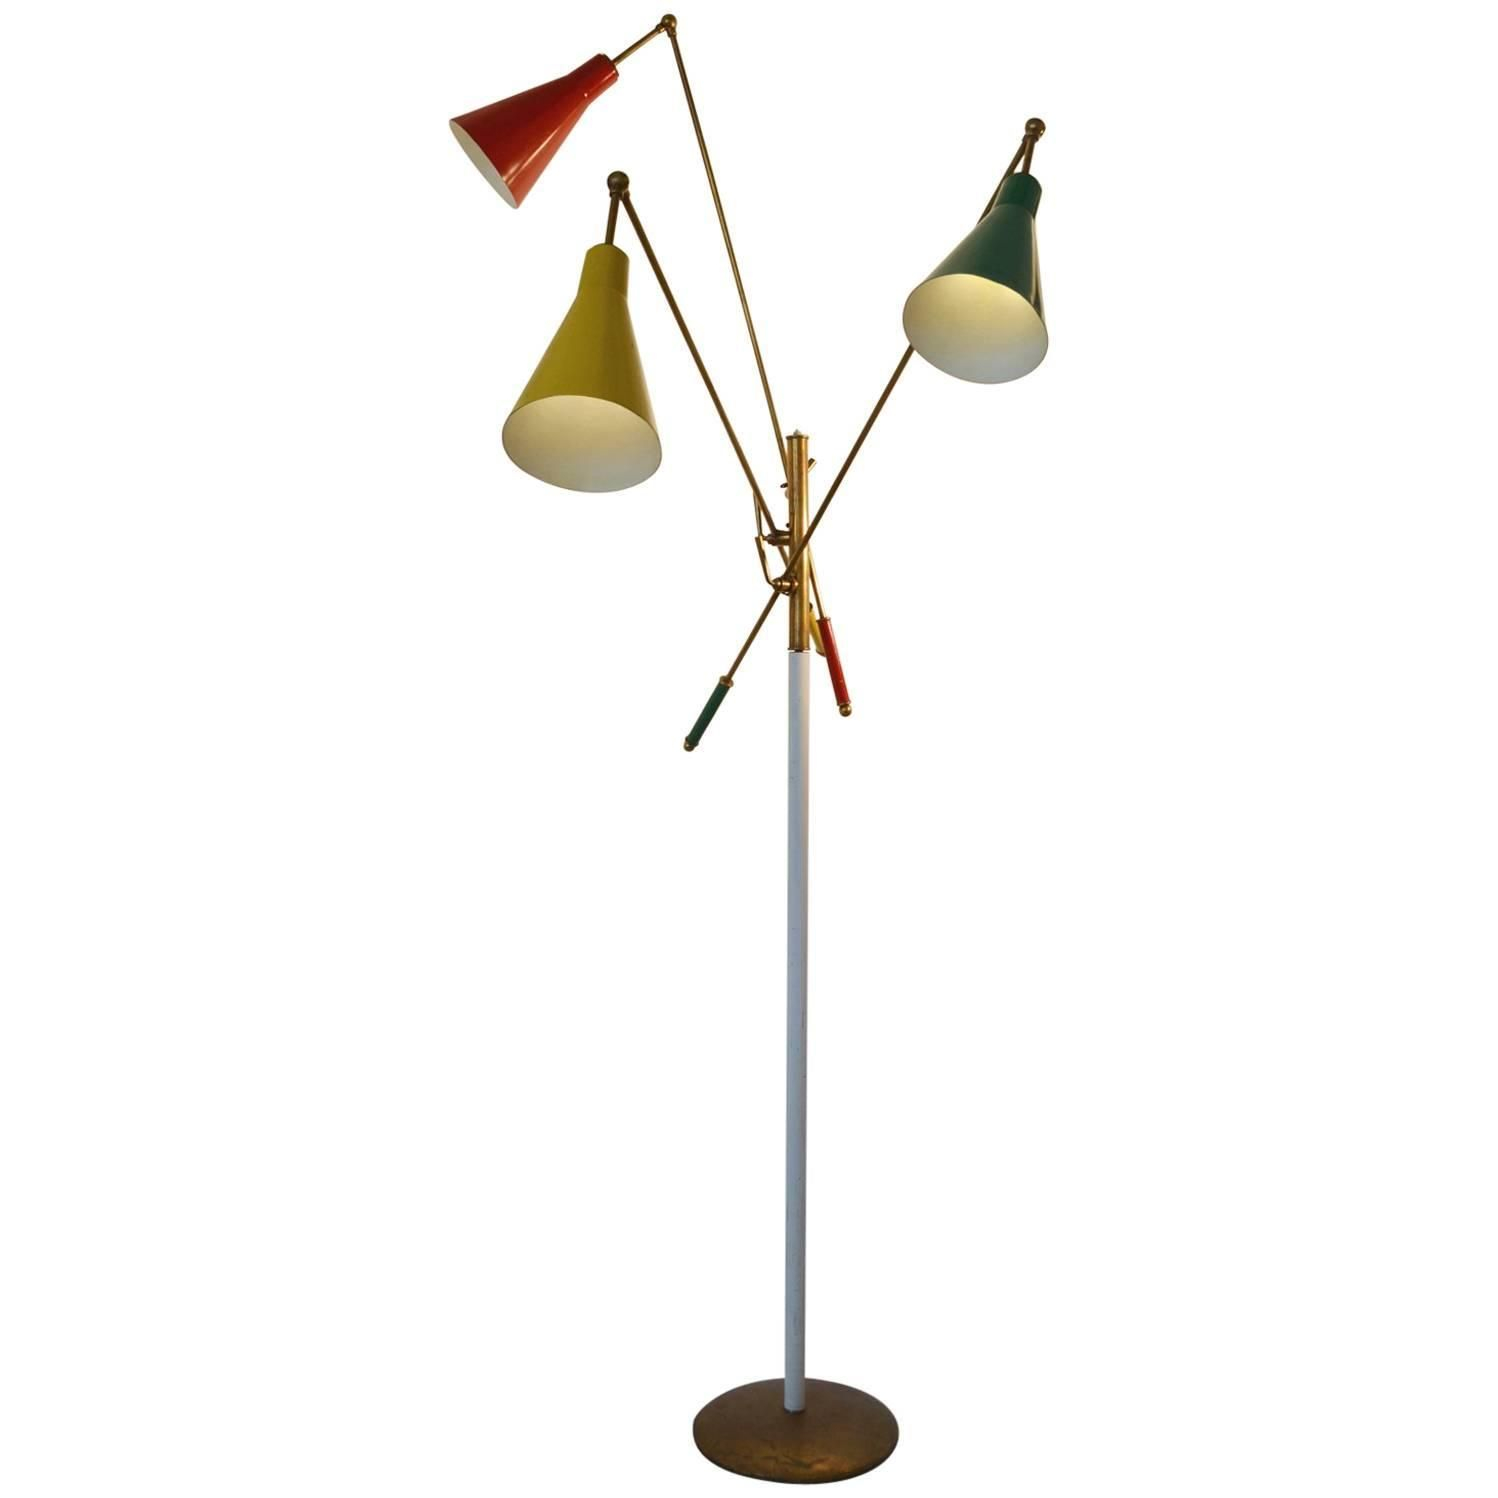 1950s Italian Multicolored Modernist Floor Lamp In The Style regarding measurements 1498 X 1498